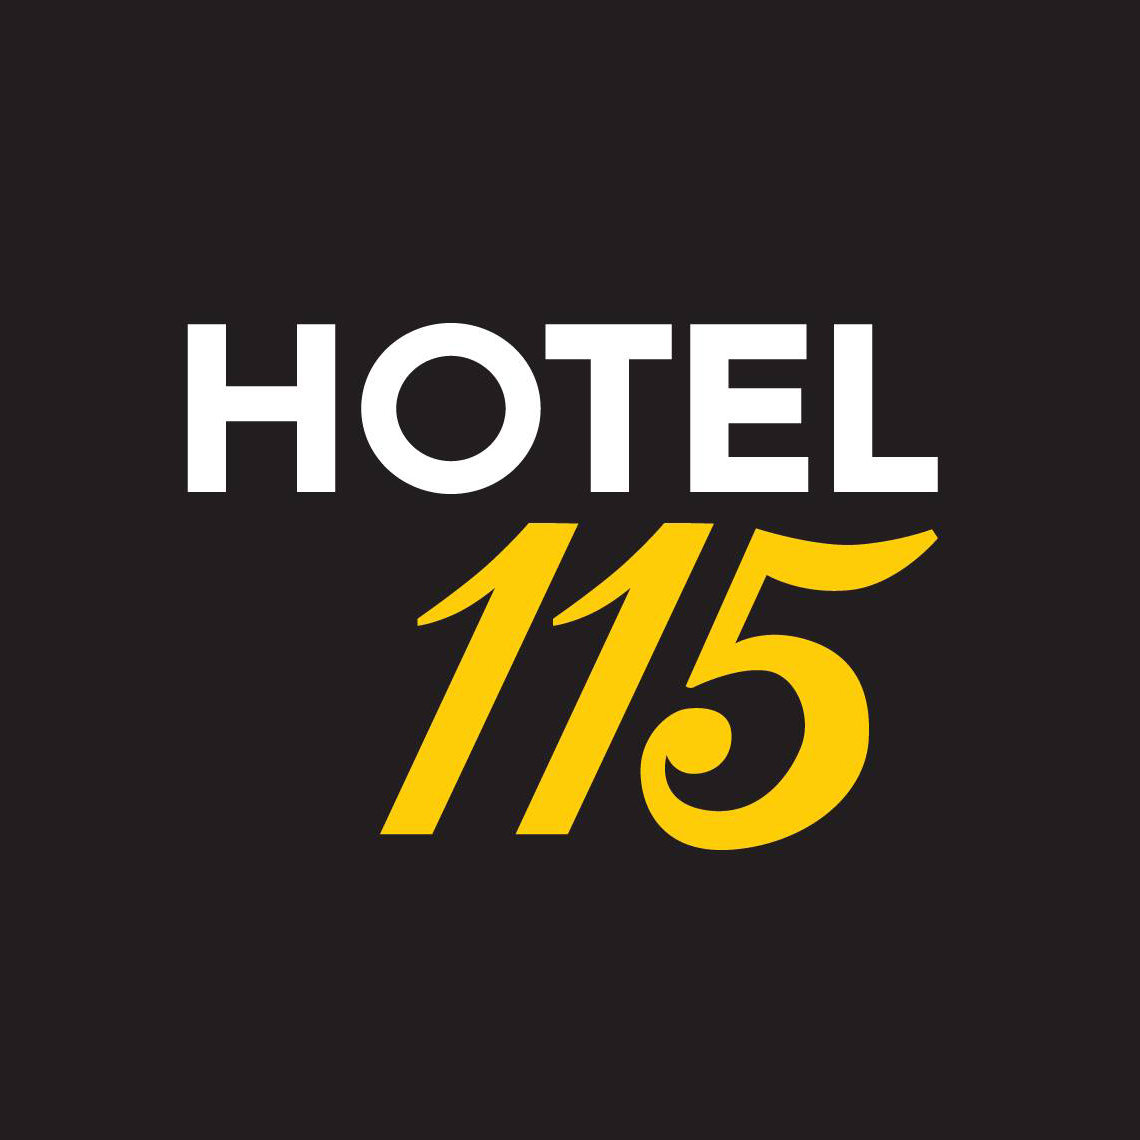 ”Hotel115